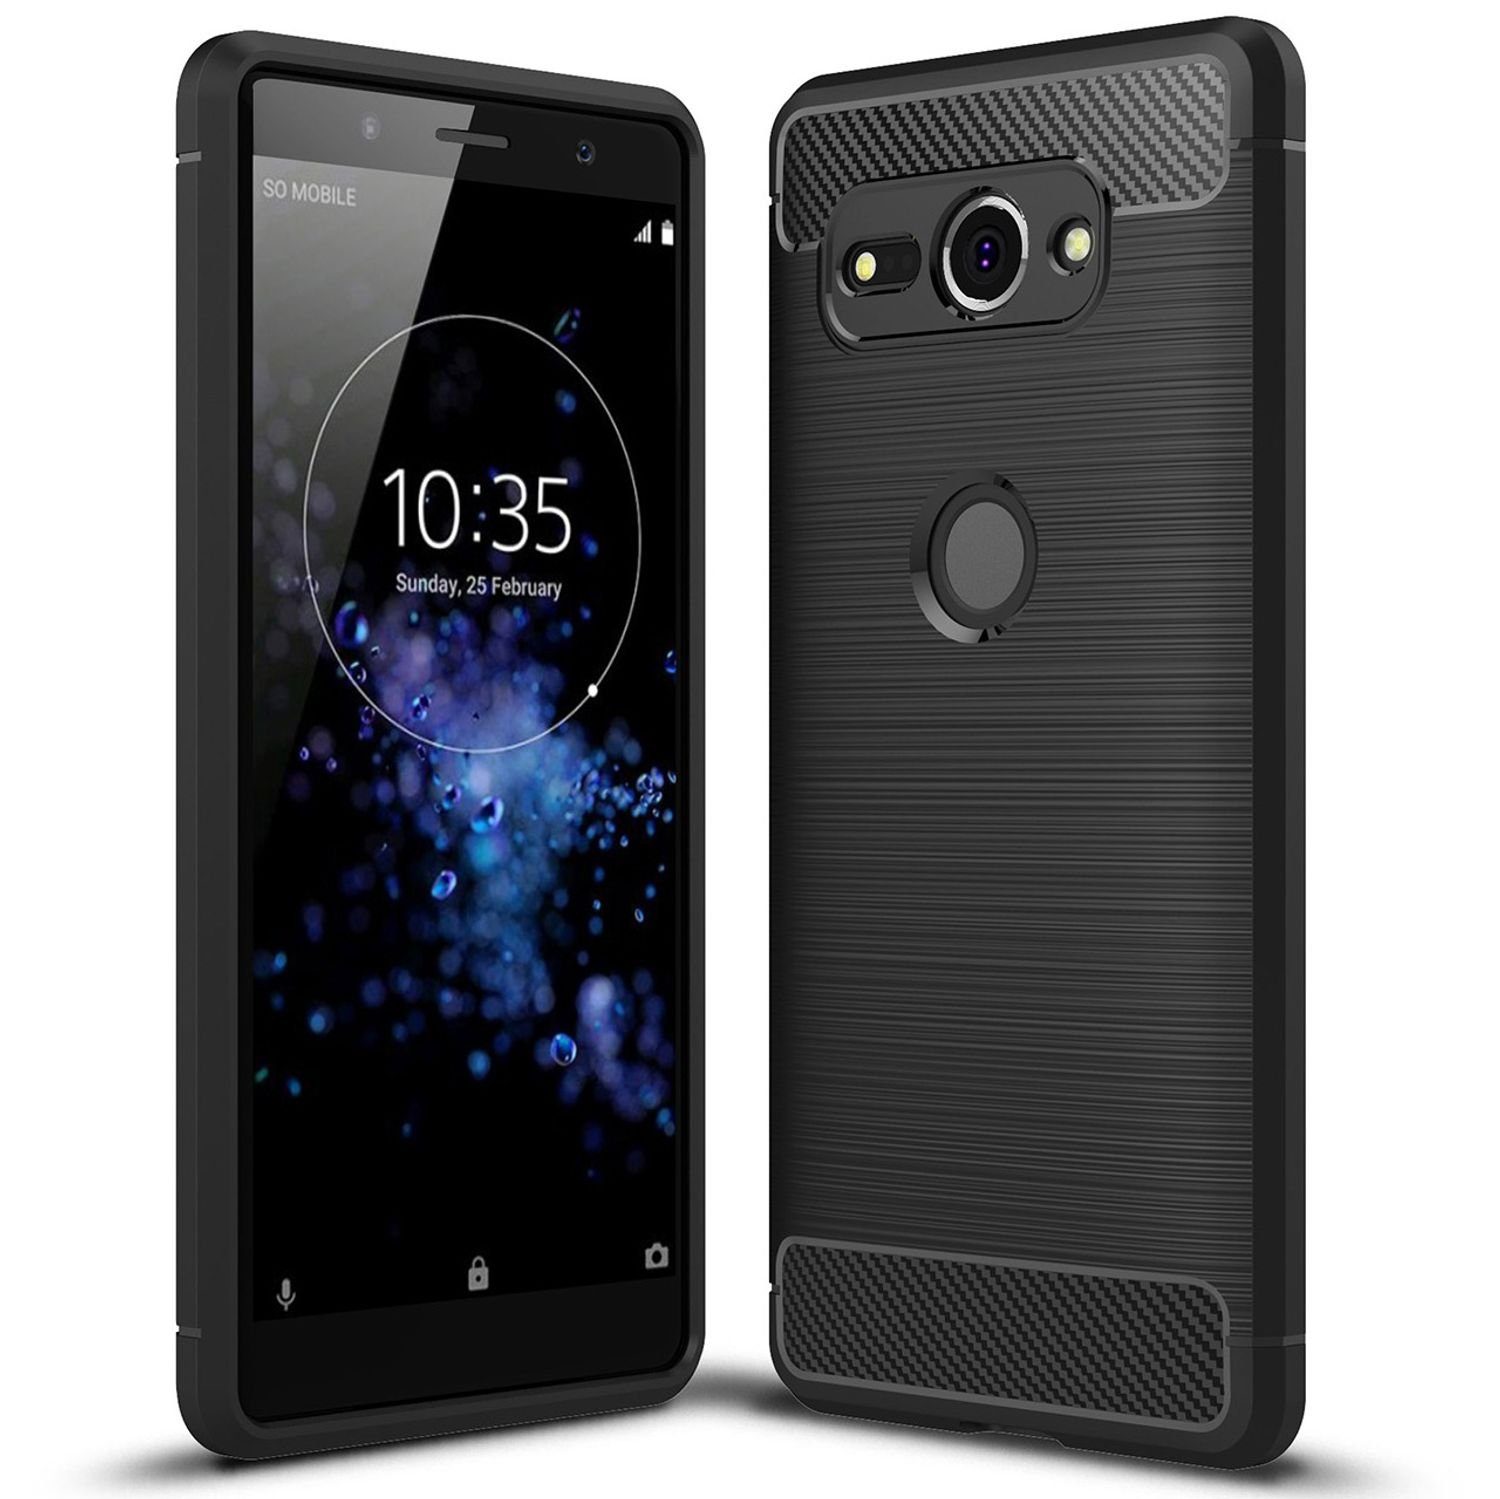 Nalia Smartphone-Hülle Sony Xperia XZ2 Compact, Carbon Look Silikon Hülle / Matt Schwarz / Rutschfest / Karbon Optik